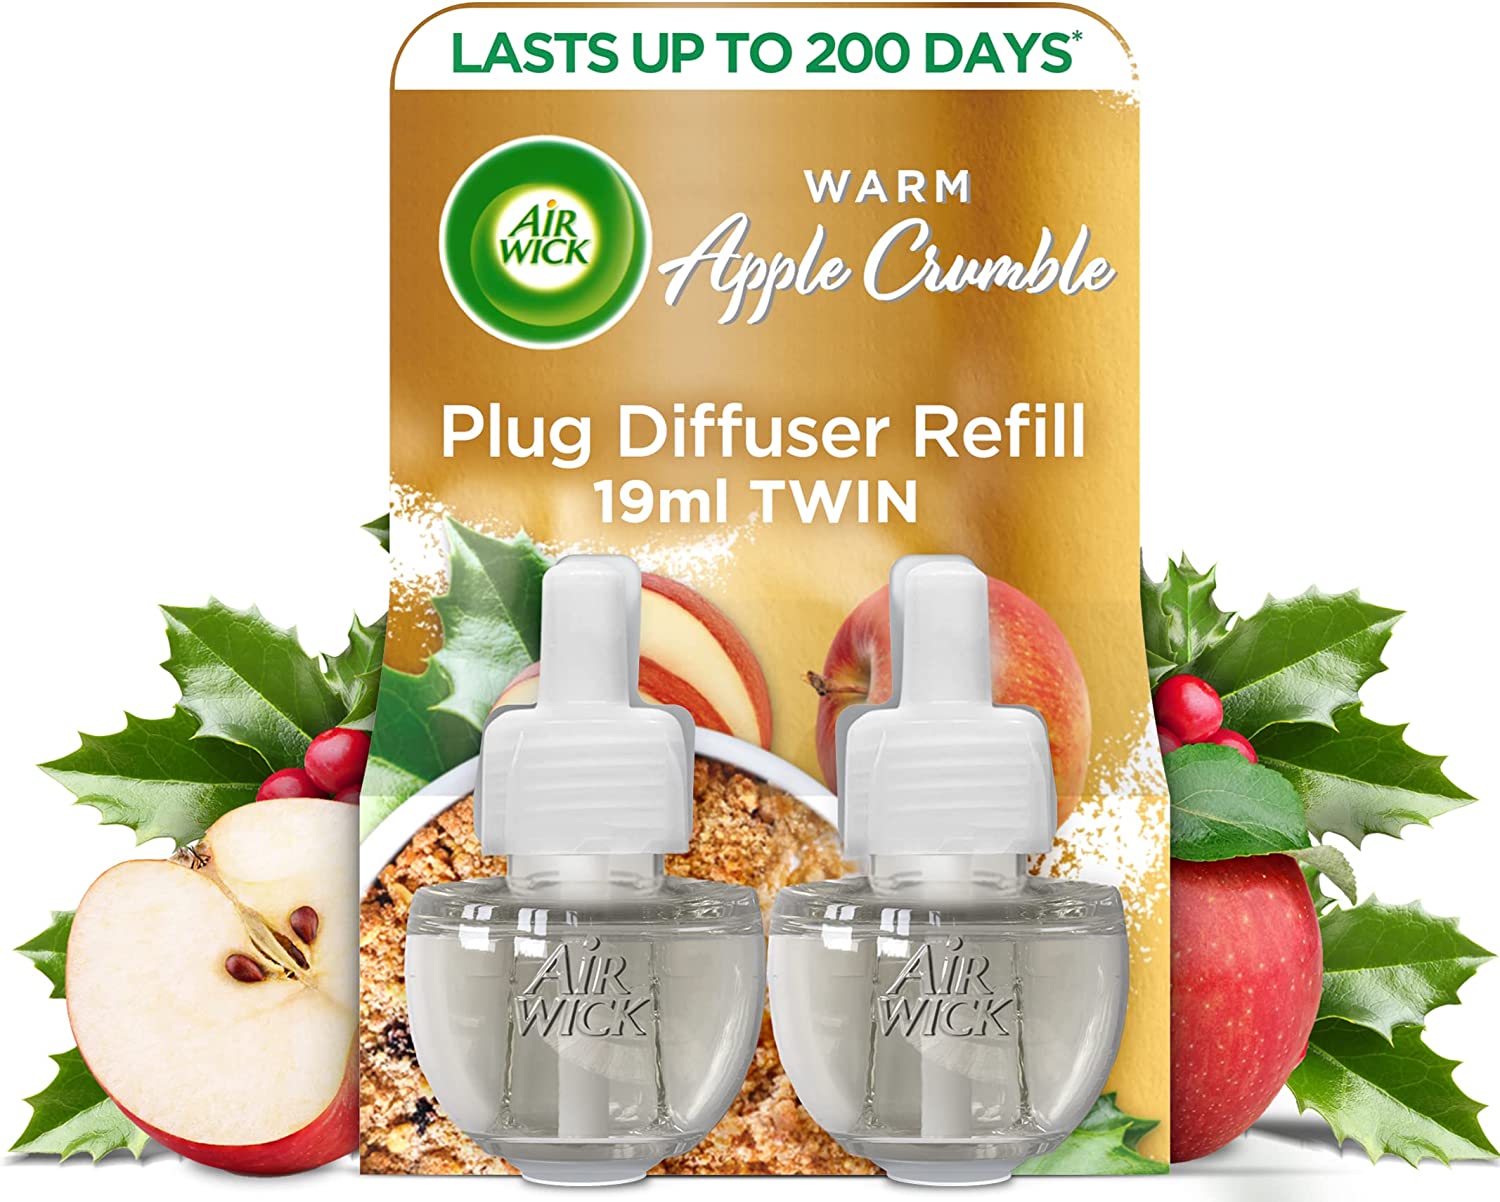 AirWick Plug In Diffuser Air Freshener Twin Refills Warm Apple Crumble RRP 7.25 CLEARANCE XL 4.99